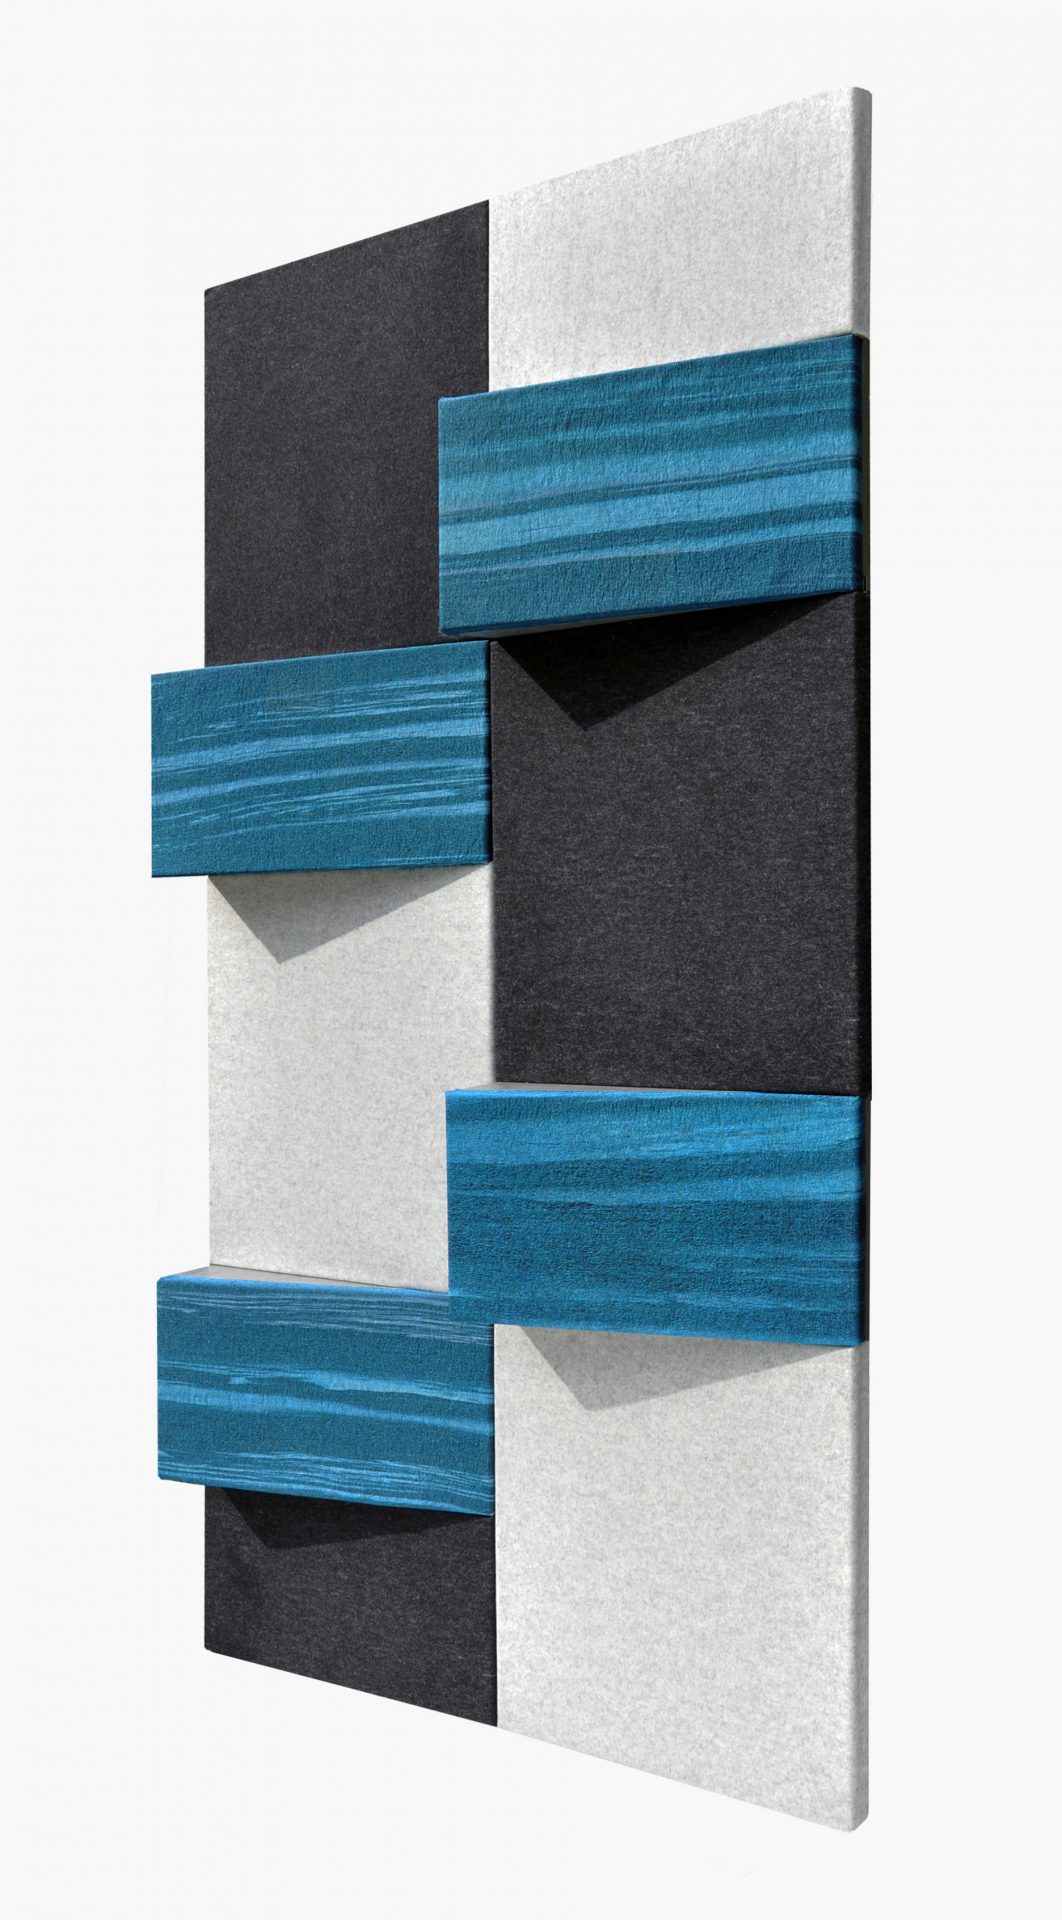 Wedges Gill Hewitt Studios Acoustic Textile Panel